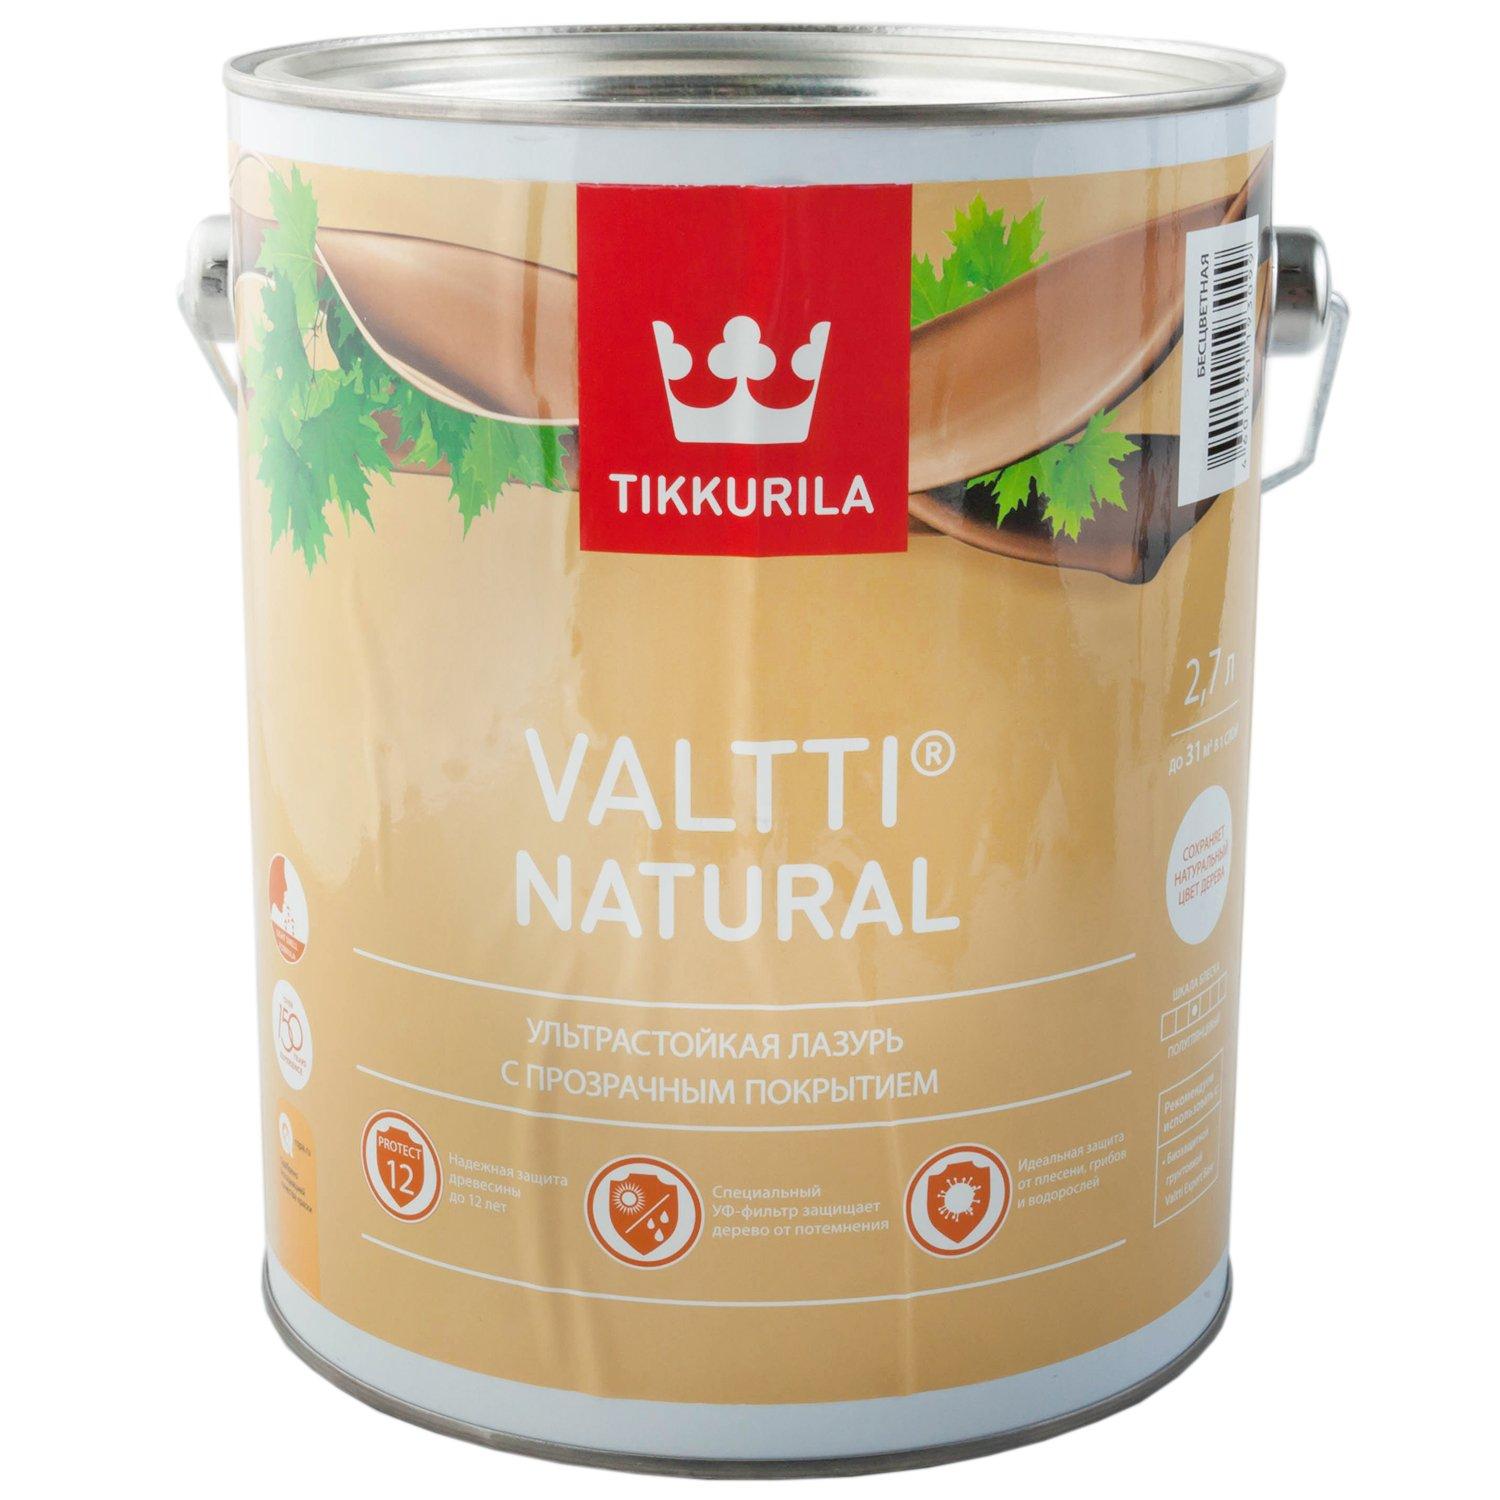 Купить Антисептик Tikkurila Valtti Natural 2,7 л